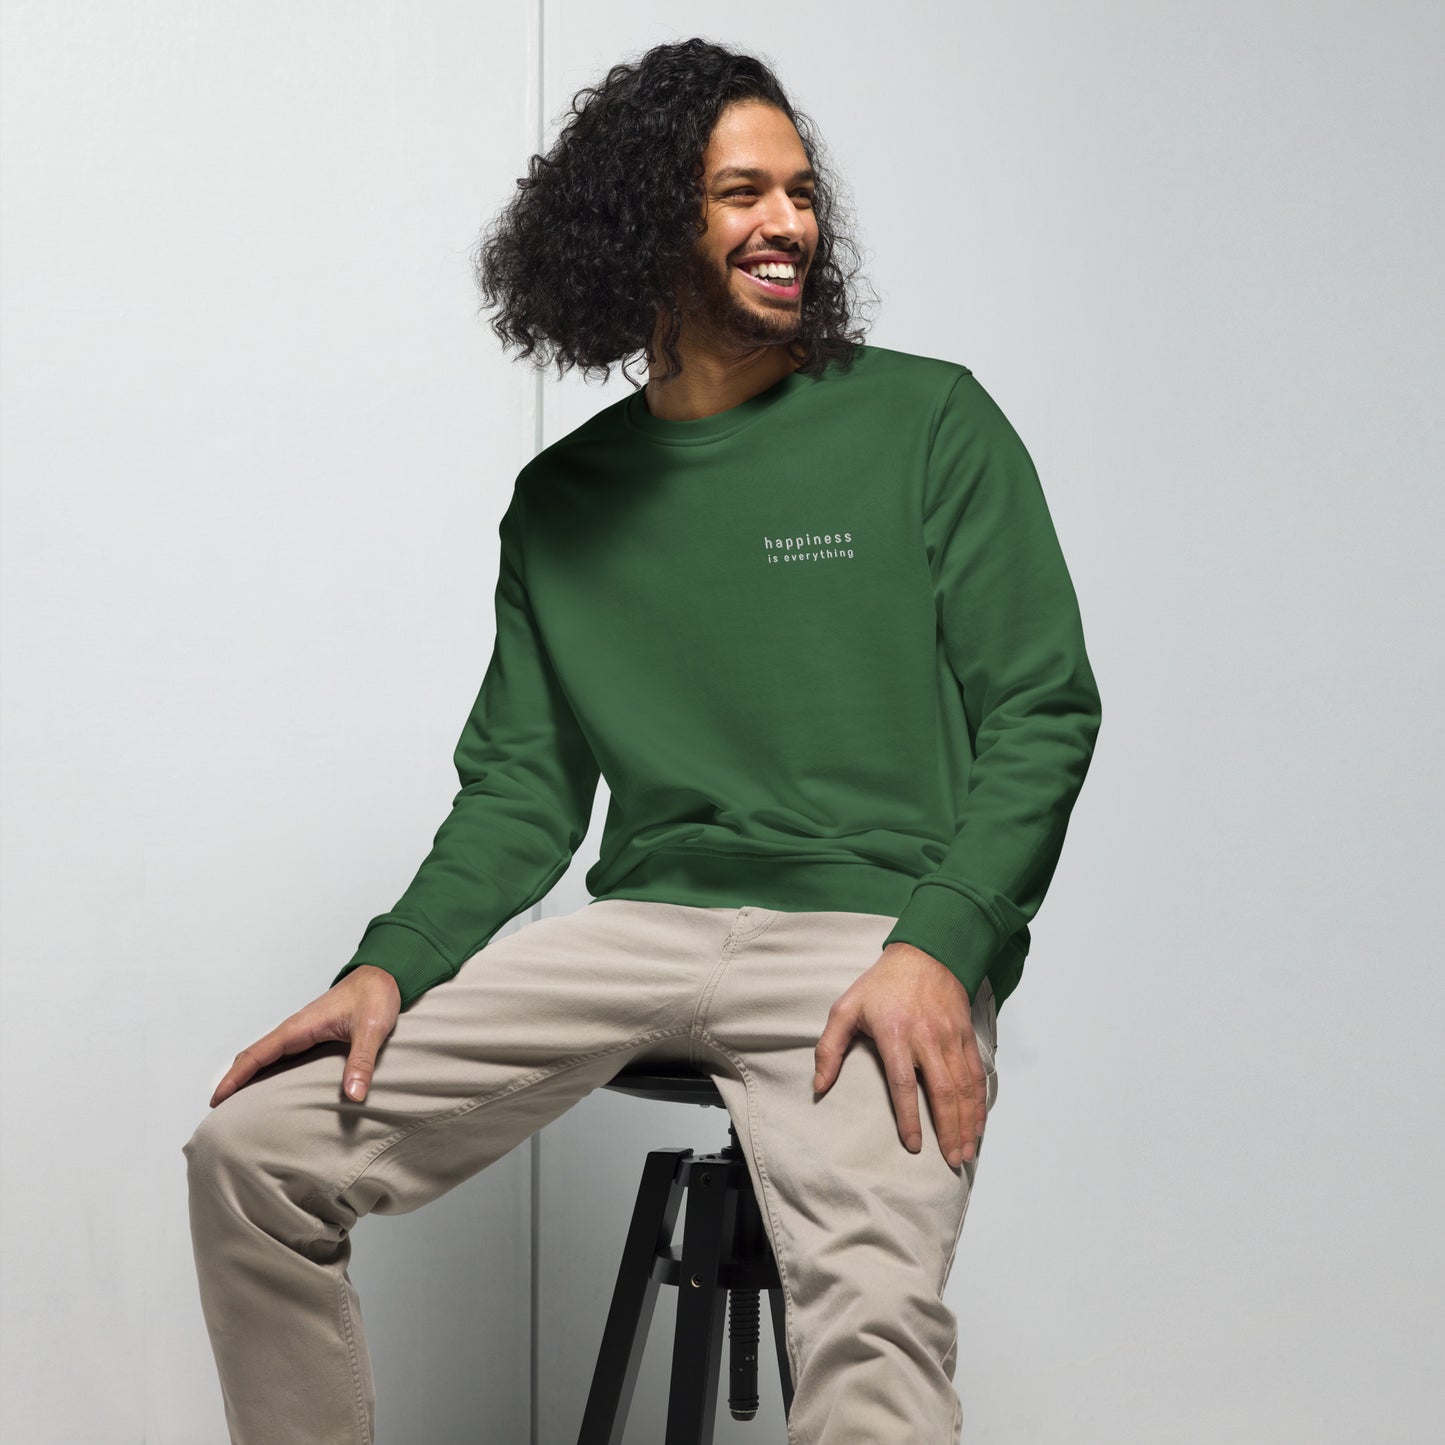 Organic Sweater | Happiness | verschiedene Farben